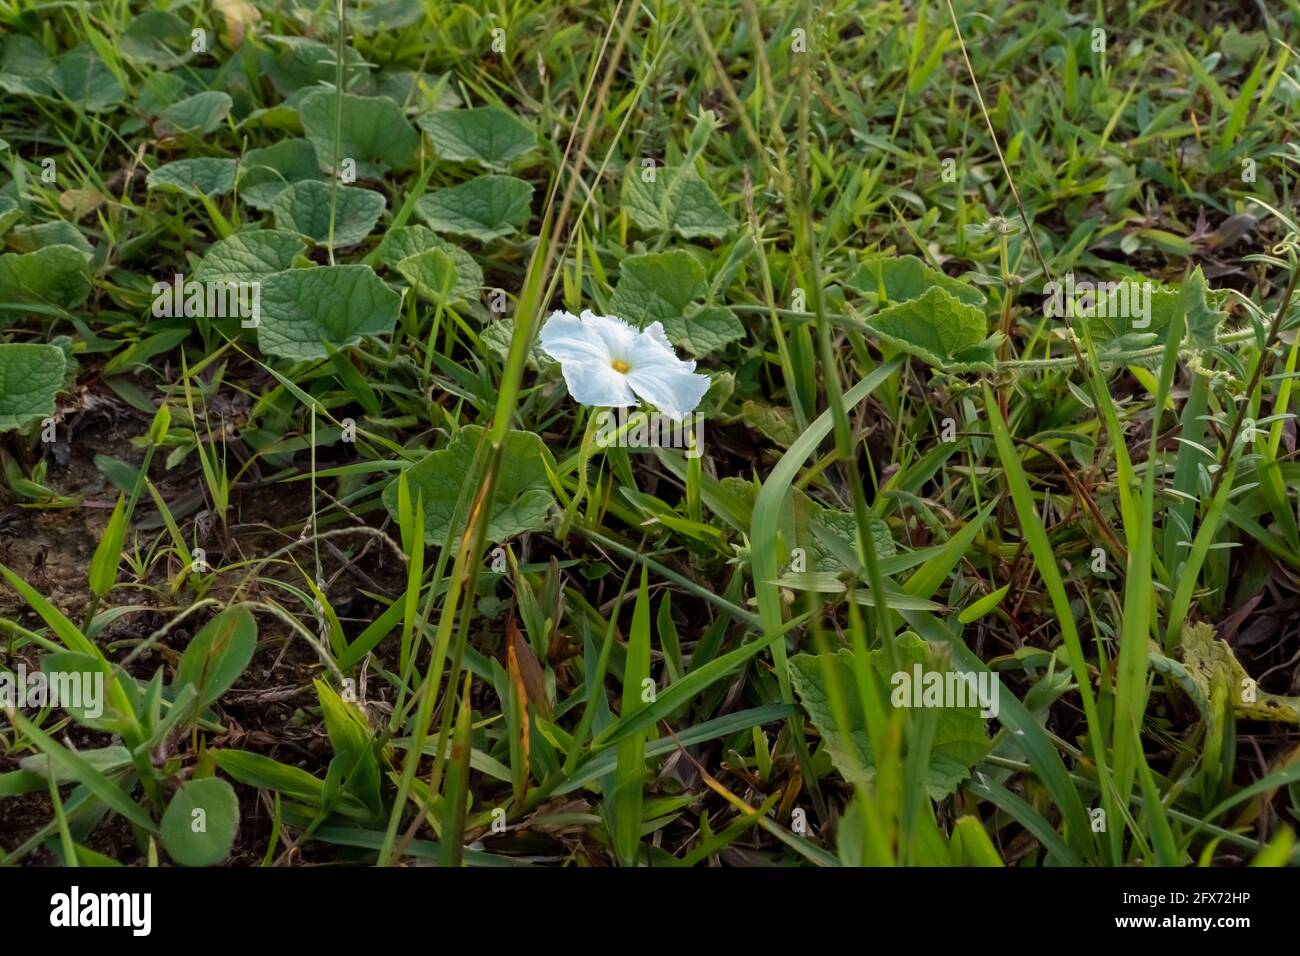 White flower in grass field Stock Photo